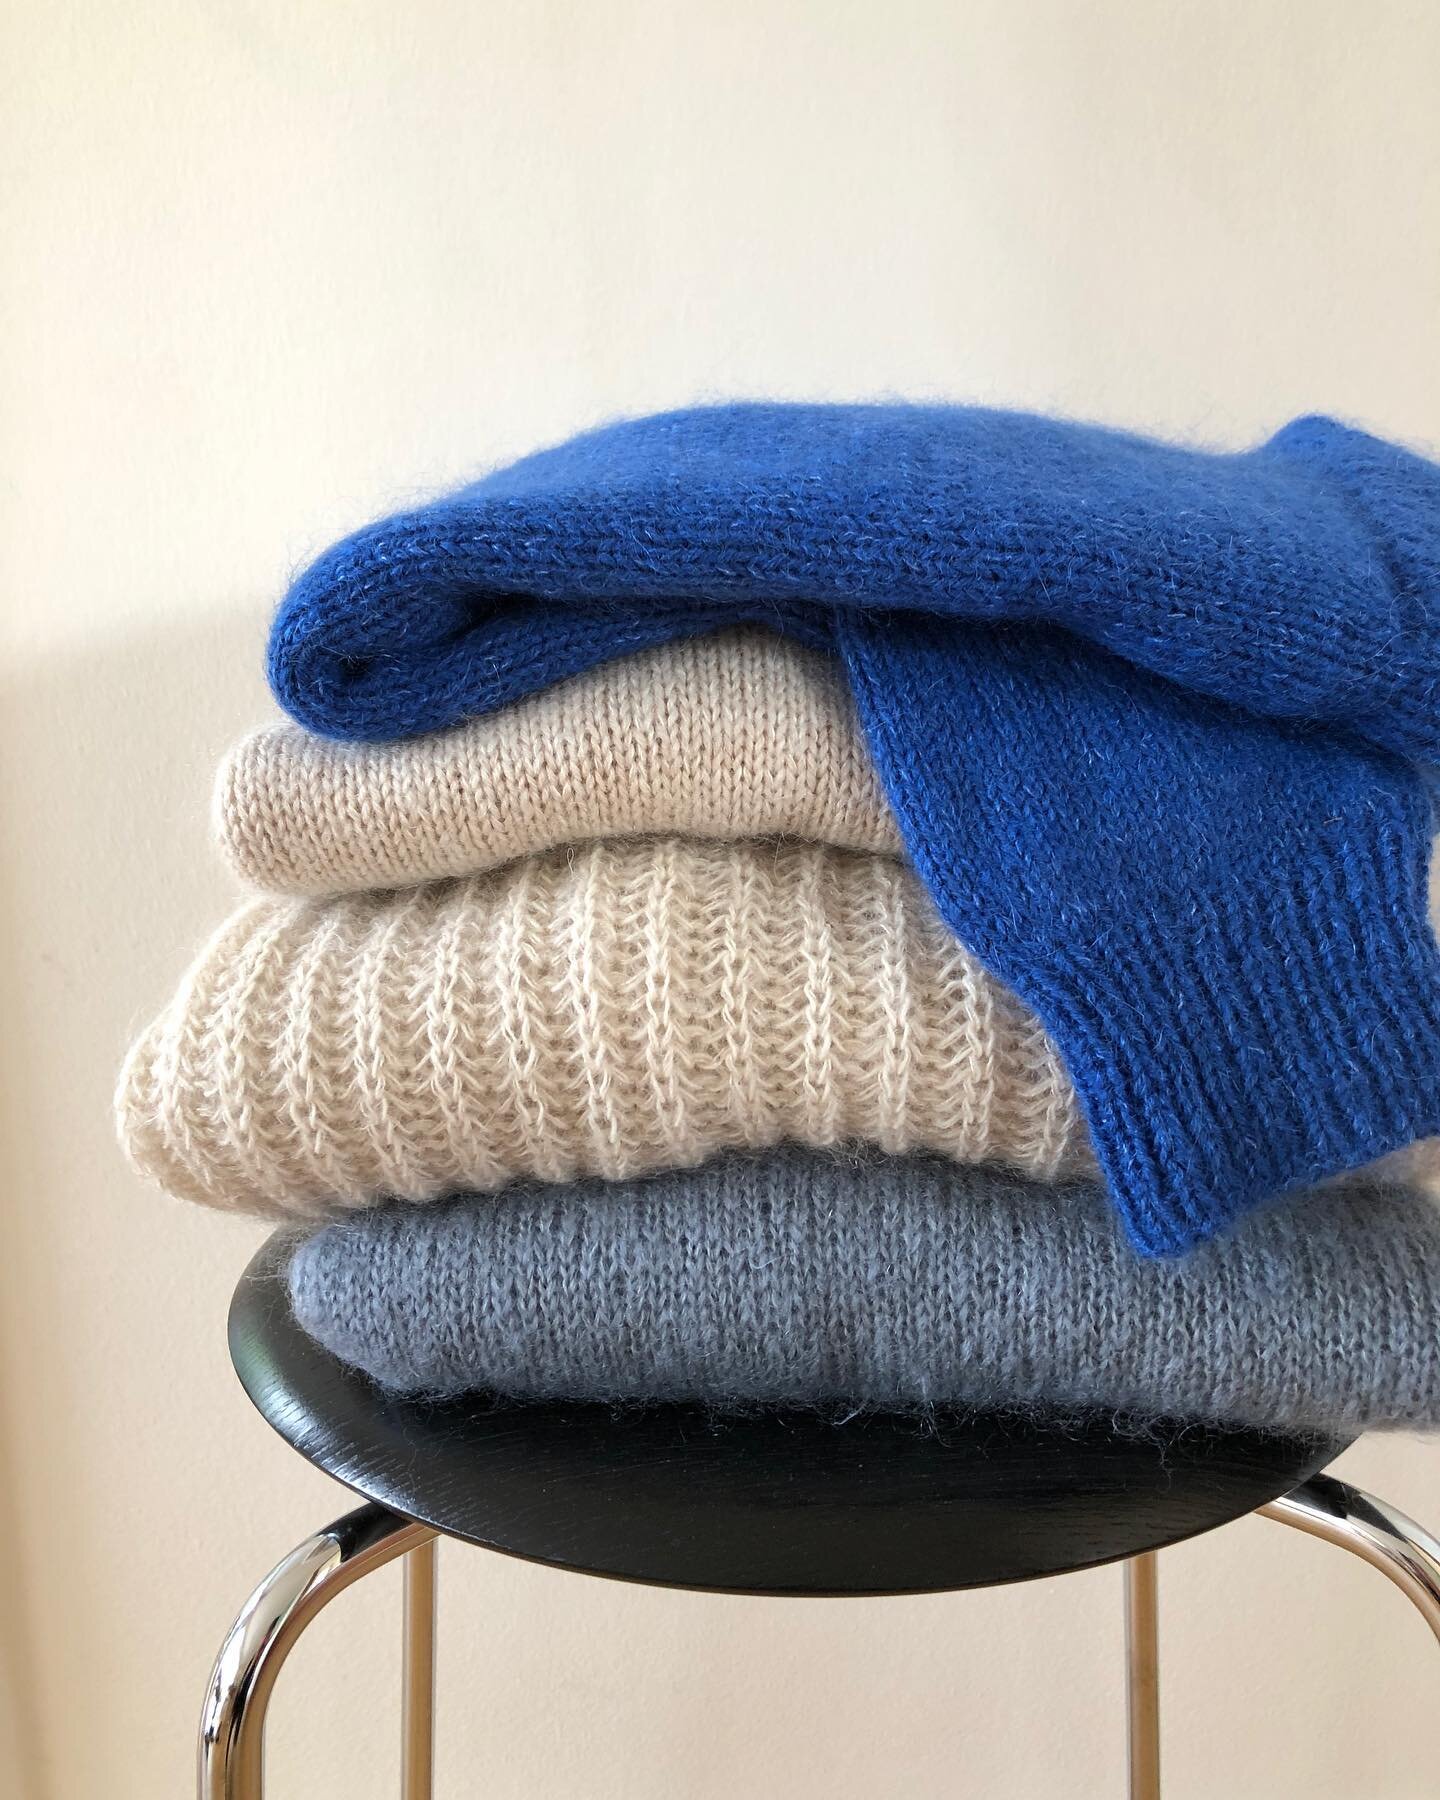 🫐🤍⚪️🐟

#petiteknit #stockholmsweater #ingridsweater #ingendikkedarersweater #helgaisagerdesign #isagergarn #strik #knitting #knittinglove #knittingwear #nordicknitters #knittersofinstagram #knitting_inspire #knittingaddict